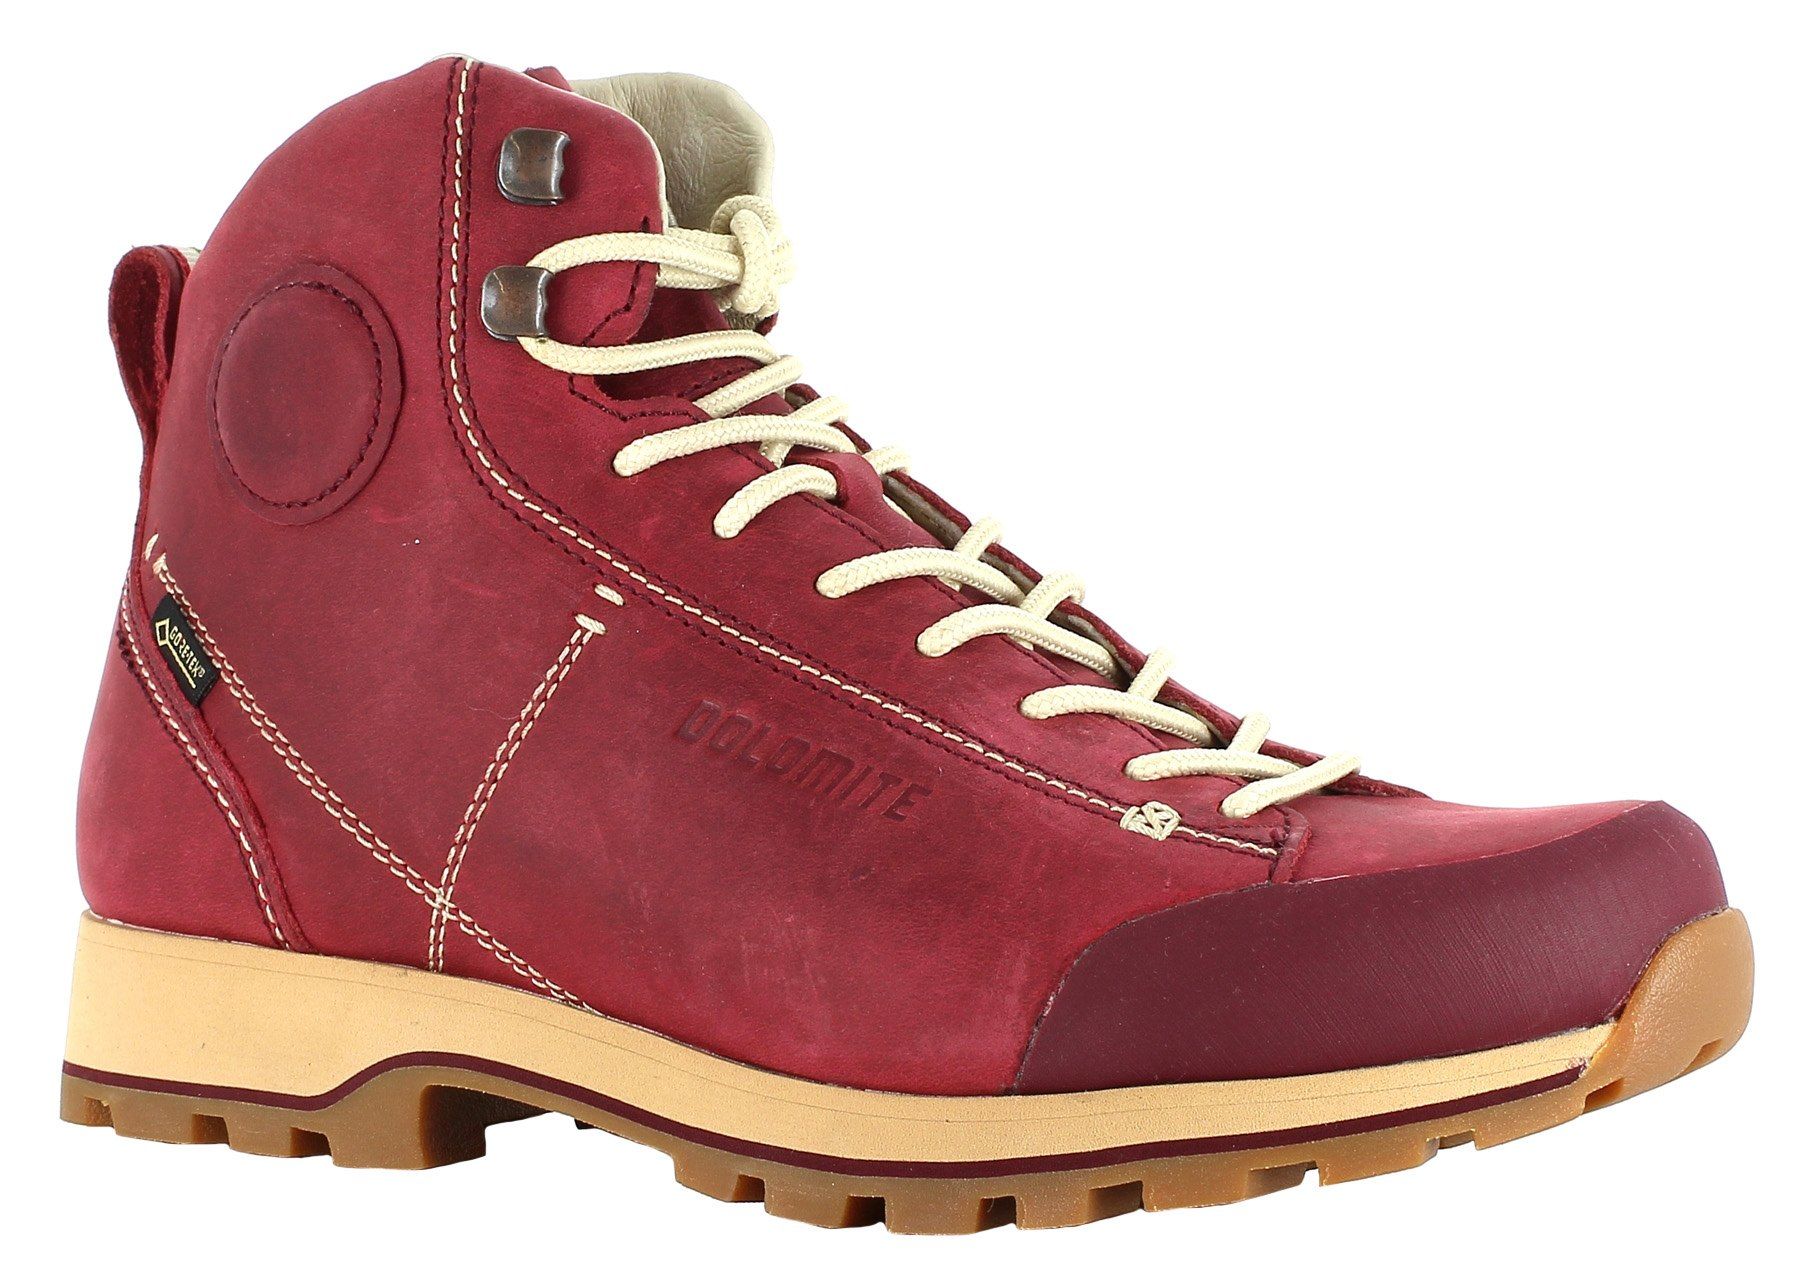 Ботинки Dolomite Cinquantaquattro High FG GTX, burgundy red, 4.5 UK